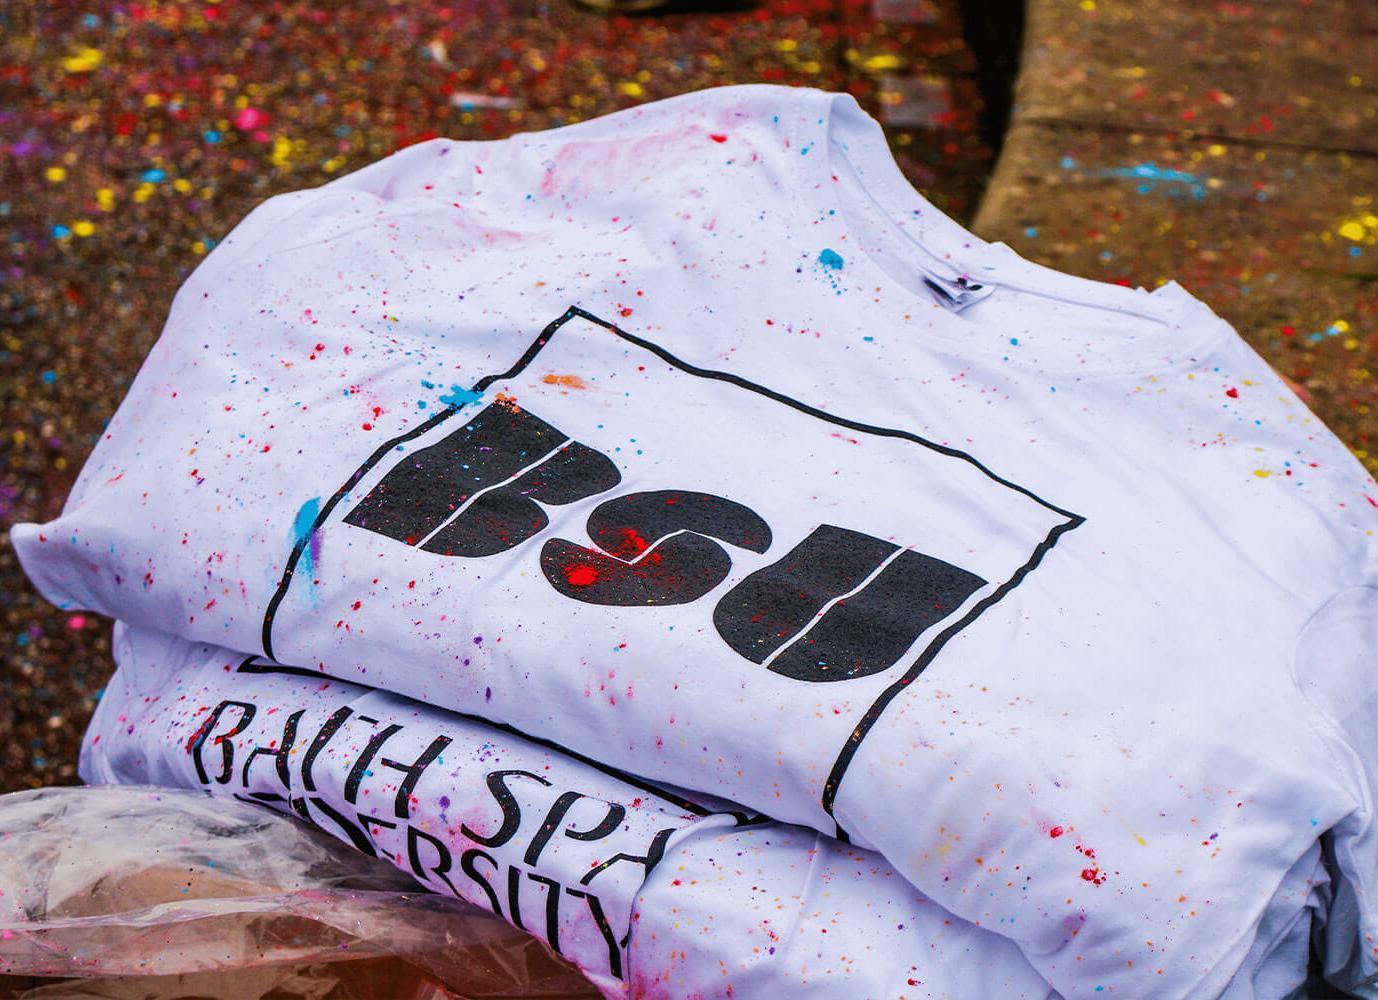 A white Bath Spa University t-shirt with paint splatters on it